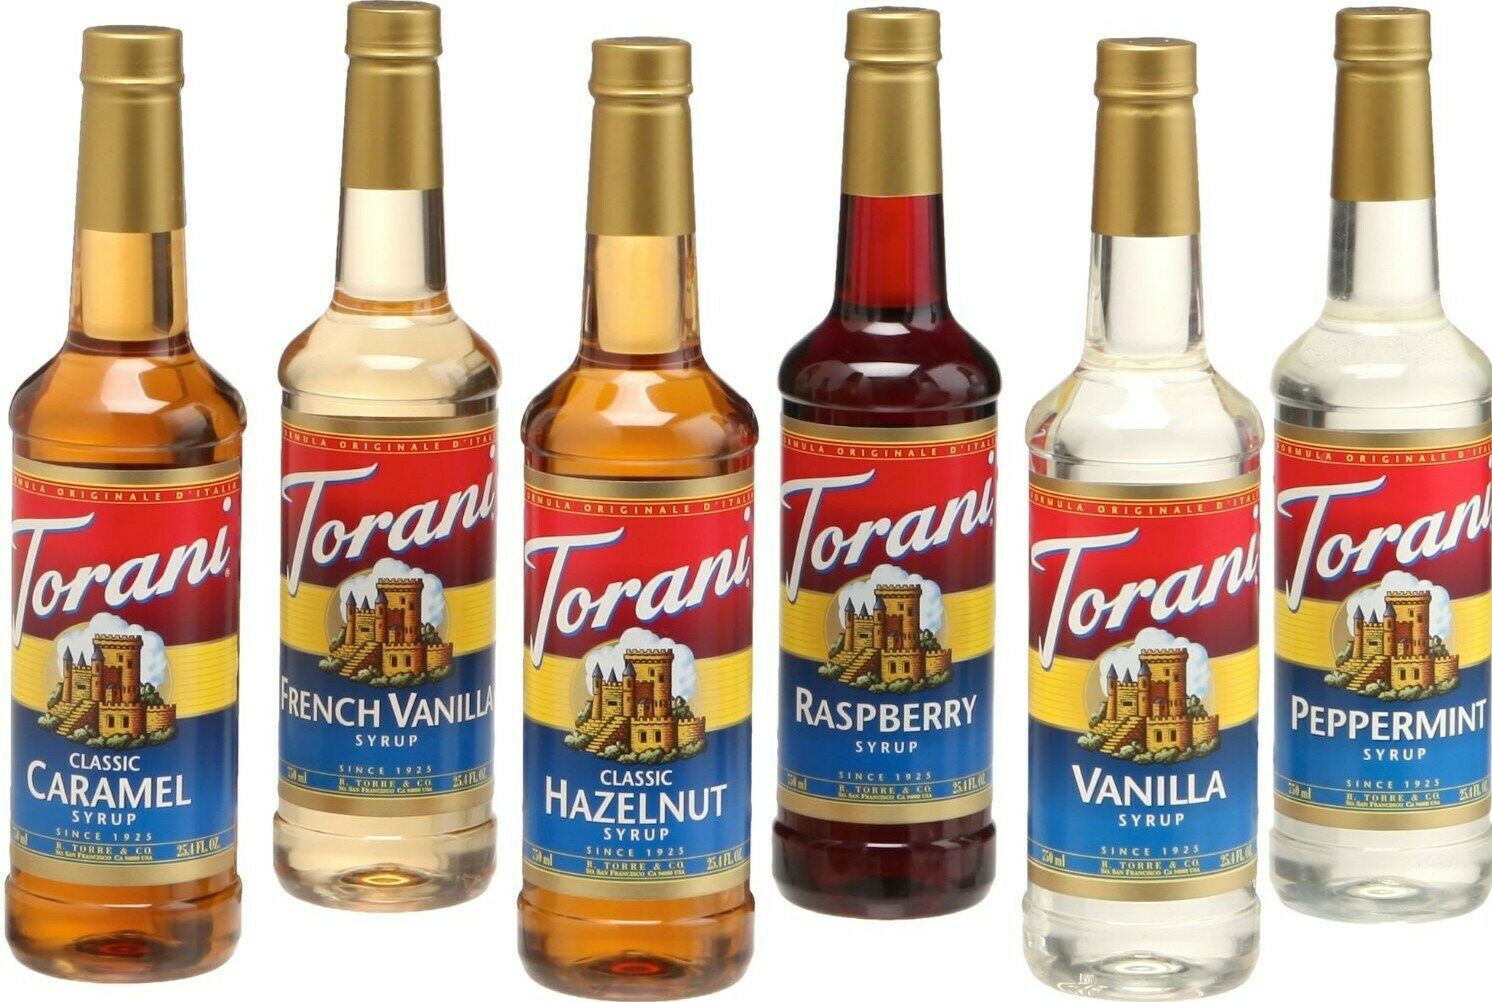 Torani 750 Ml Flavoring Syrup 25.4 Oz (select Flavor Below)